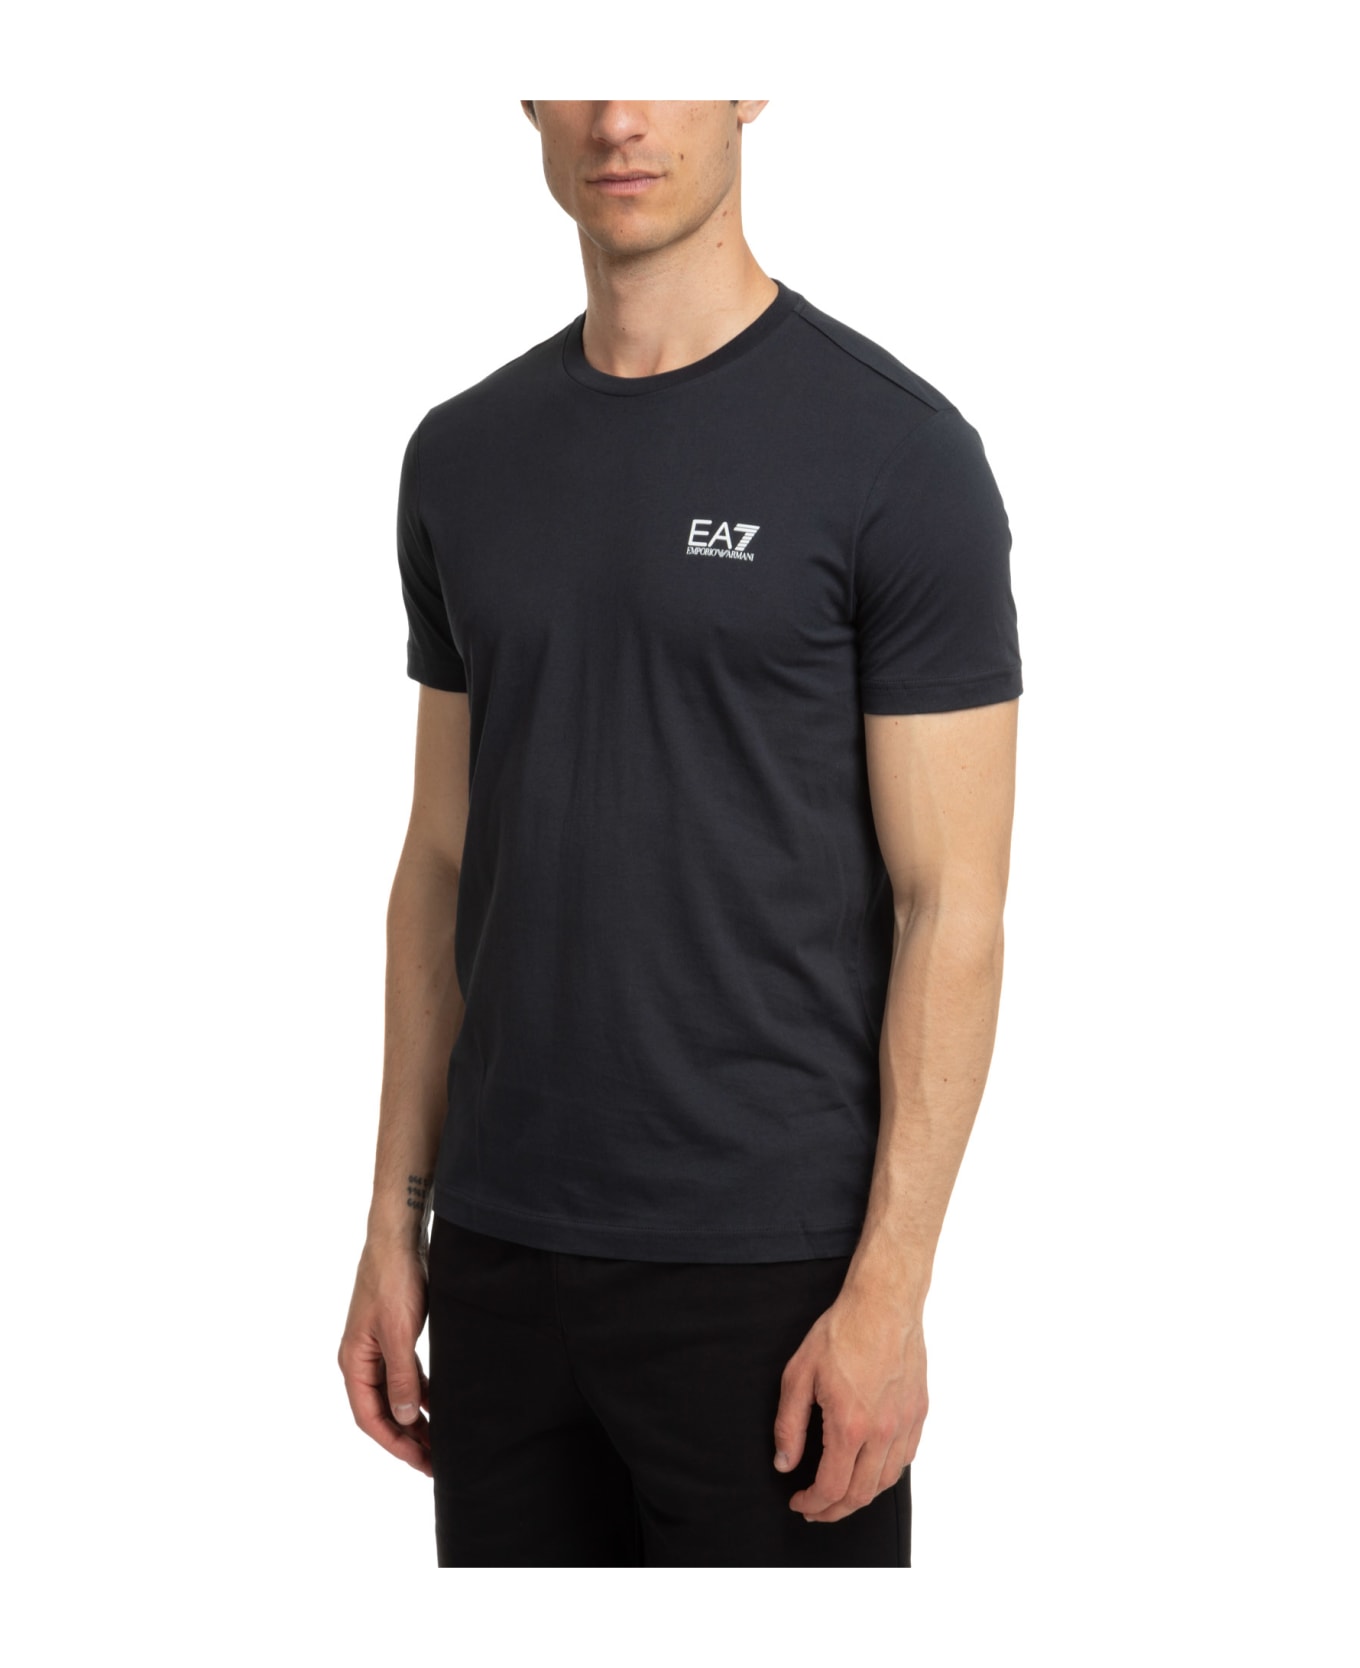 EA7 Core Identity Cotton T-shirt